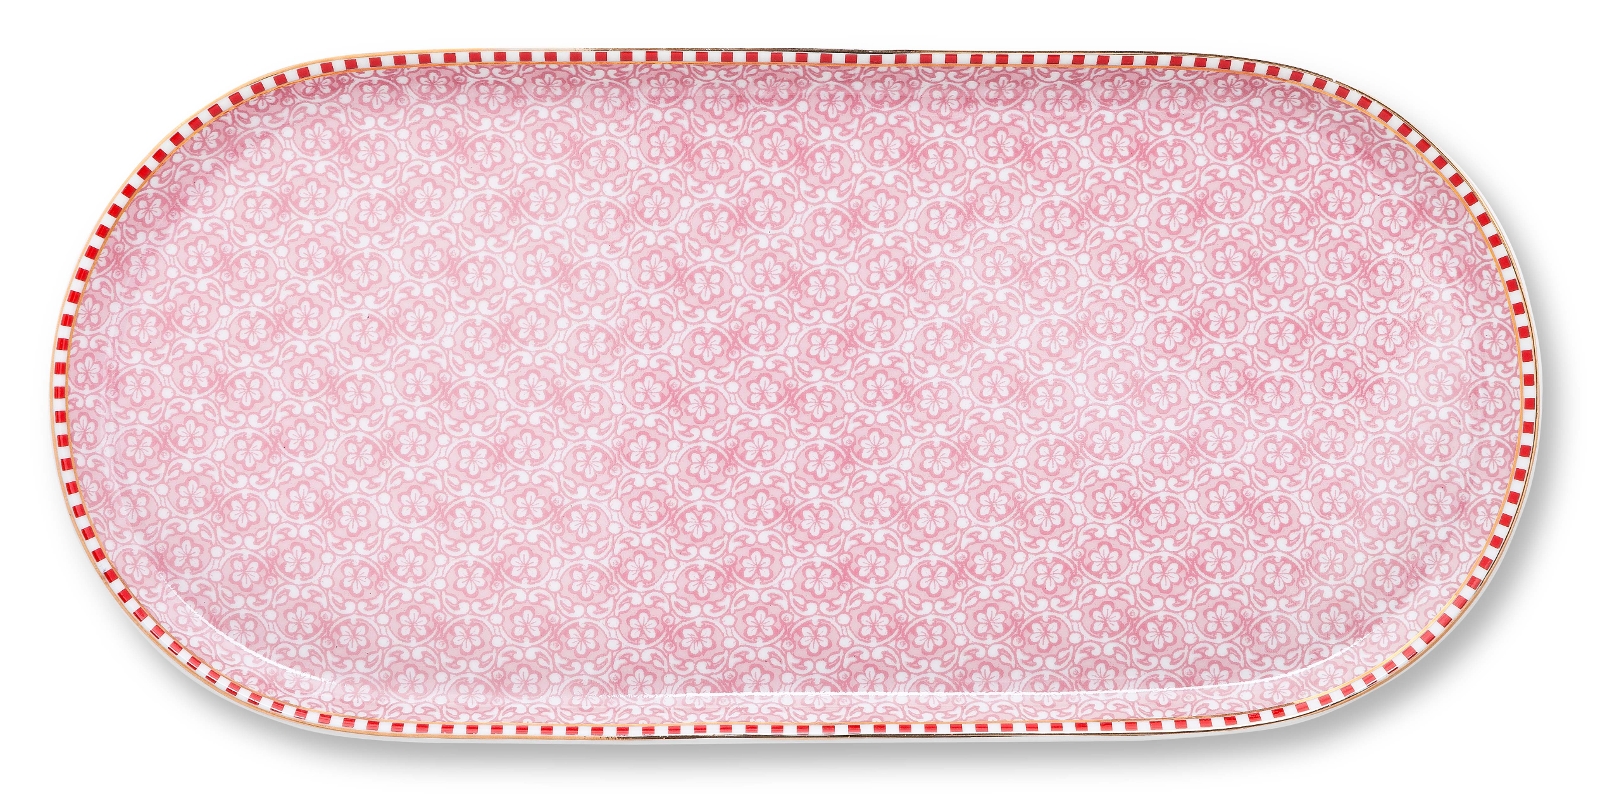 PIP STUDIO Spring to Life Pink Tablett 25 x 11,6 cm